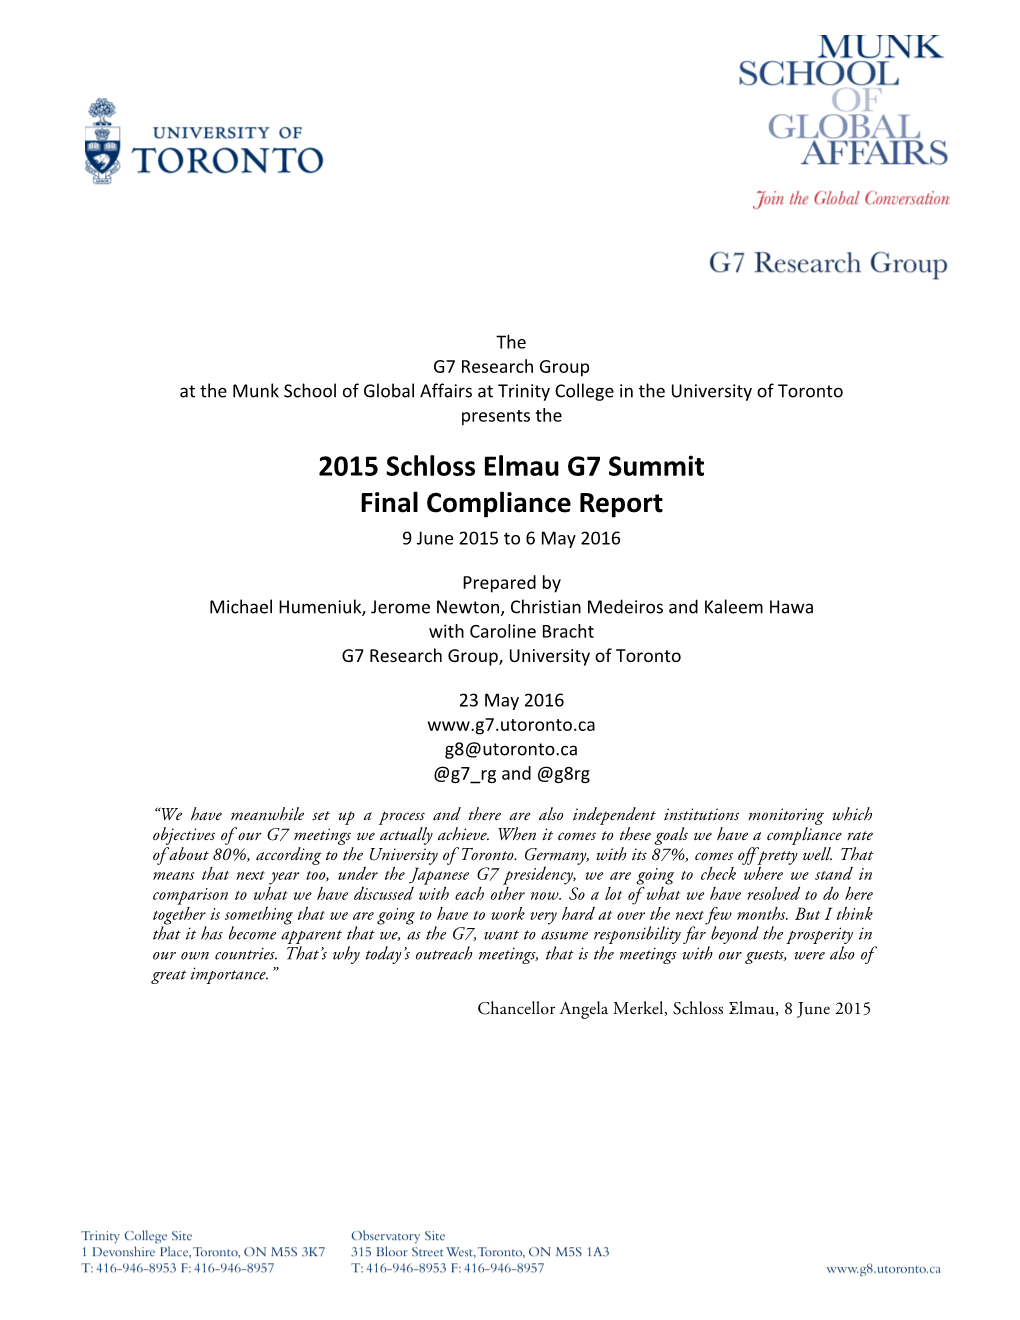 2015 Schloss Elmau G7 Summit Final Compliance Report 9 June 2015 to 6 May 2016